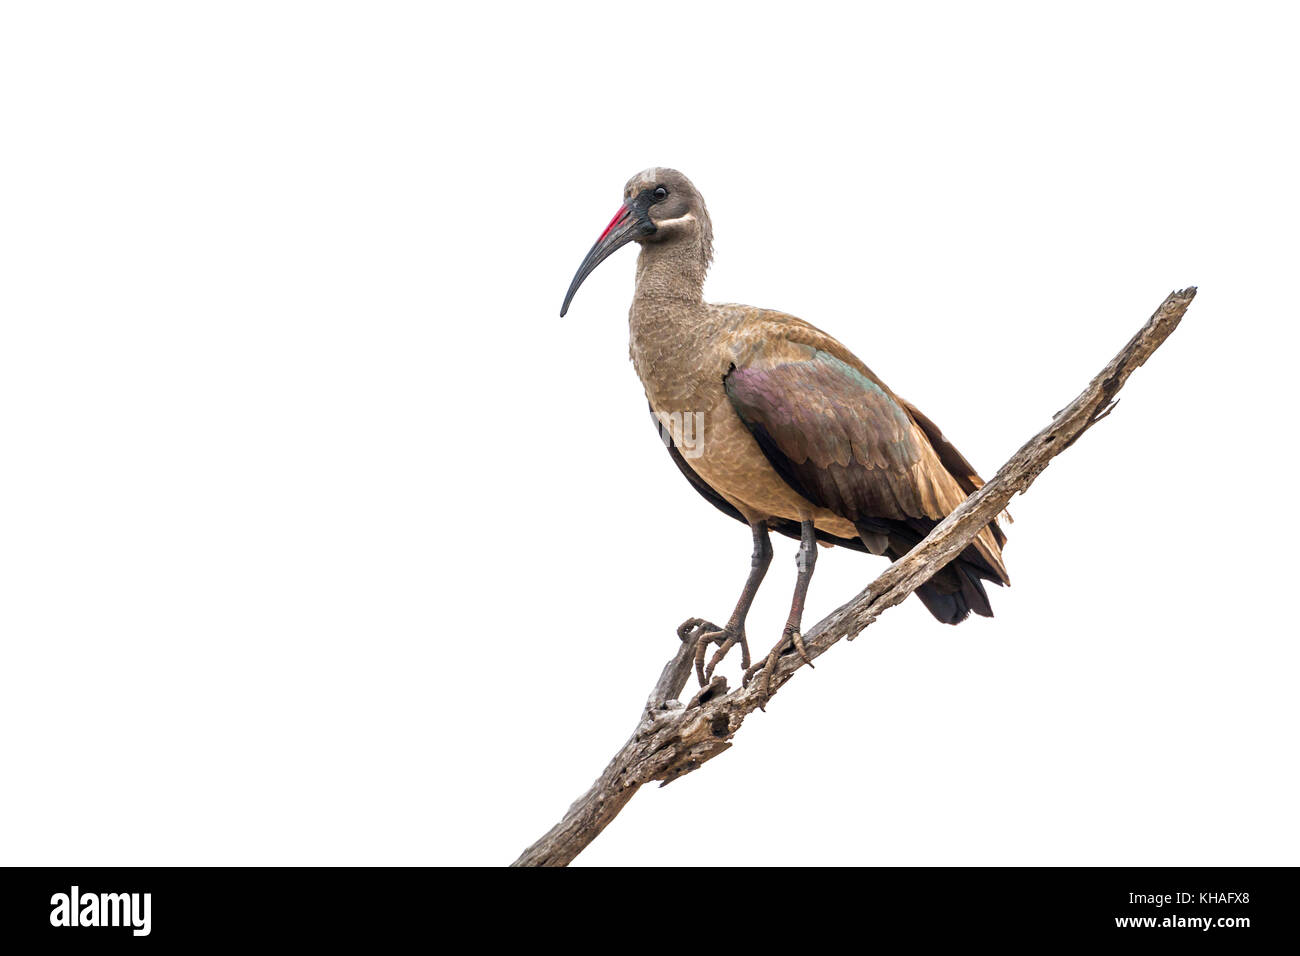 Hadada ibis in Kruger national park, South Africa ; Specie Bostrychia hagedash family of Threskiornithidae Stock Photo